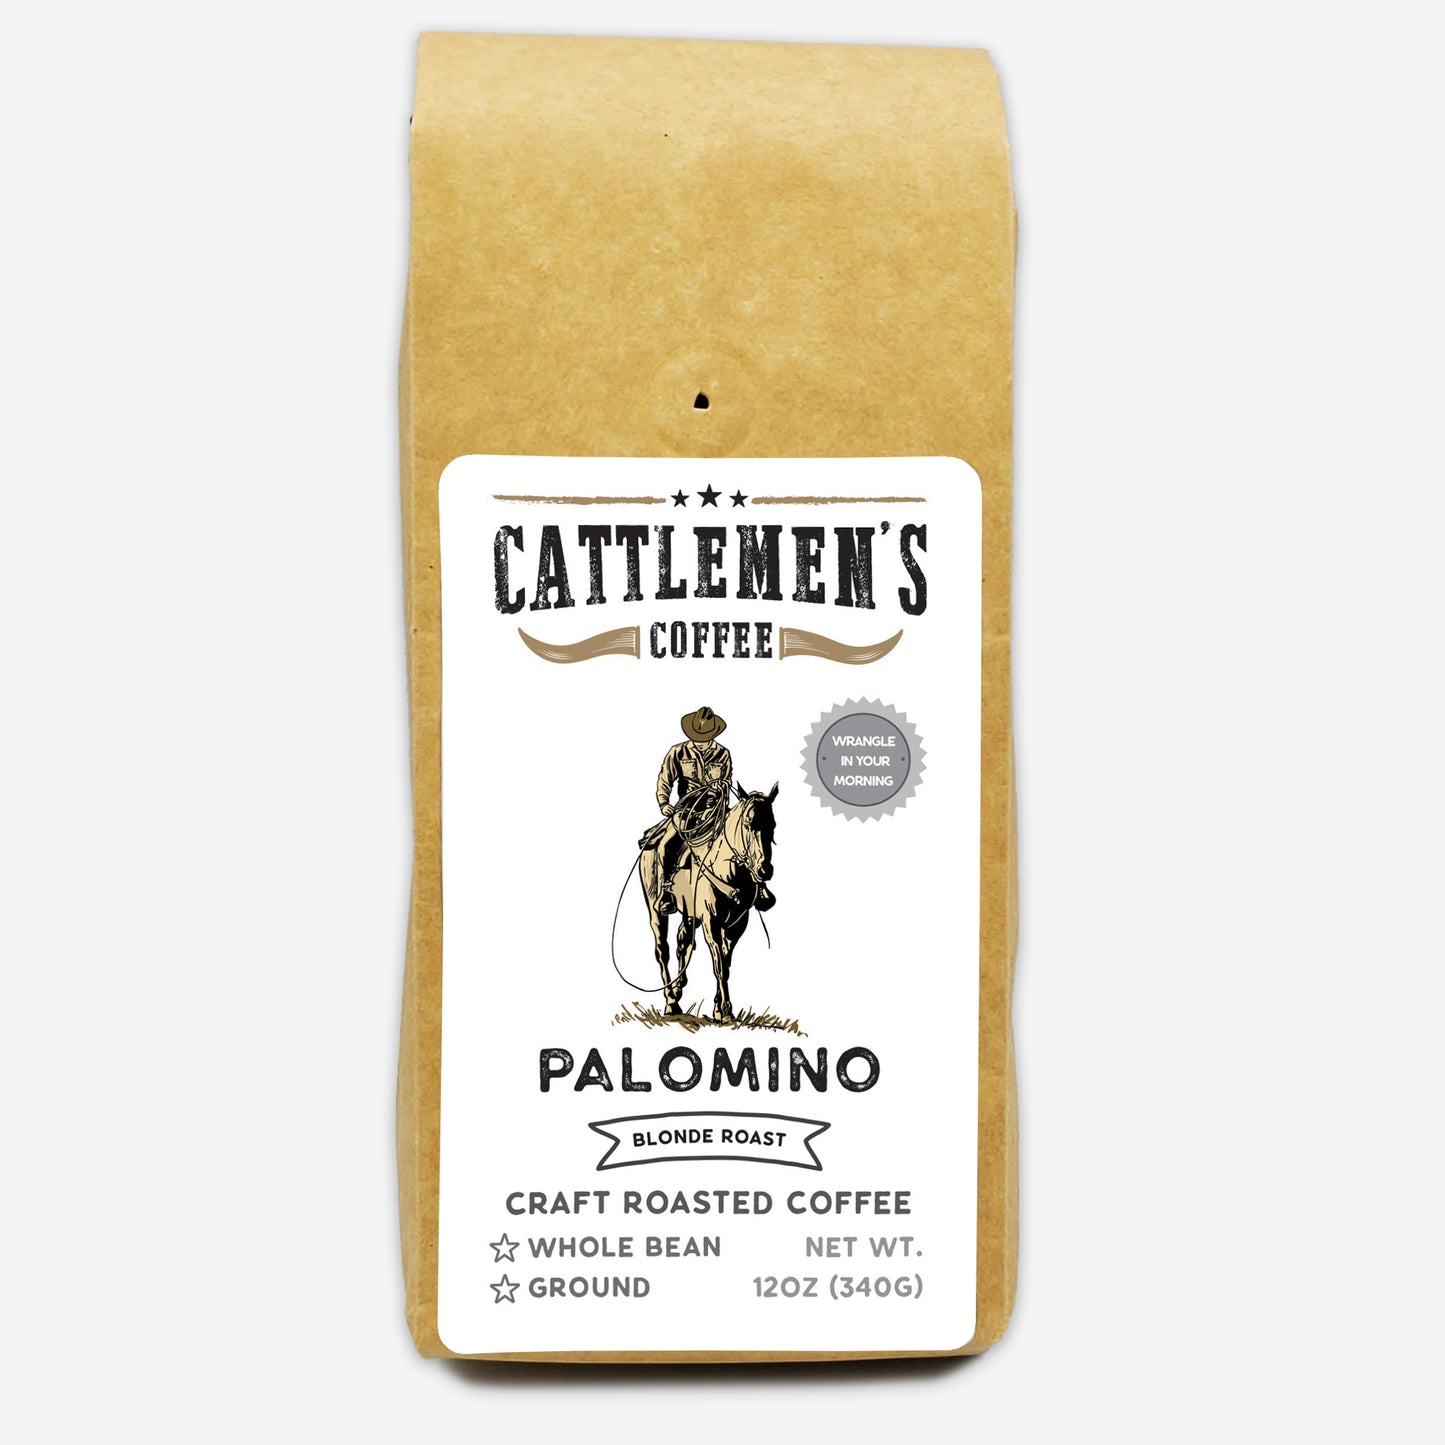 Palomino Blonde Coffee by Cattlemen's